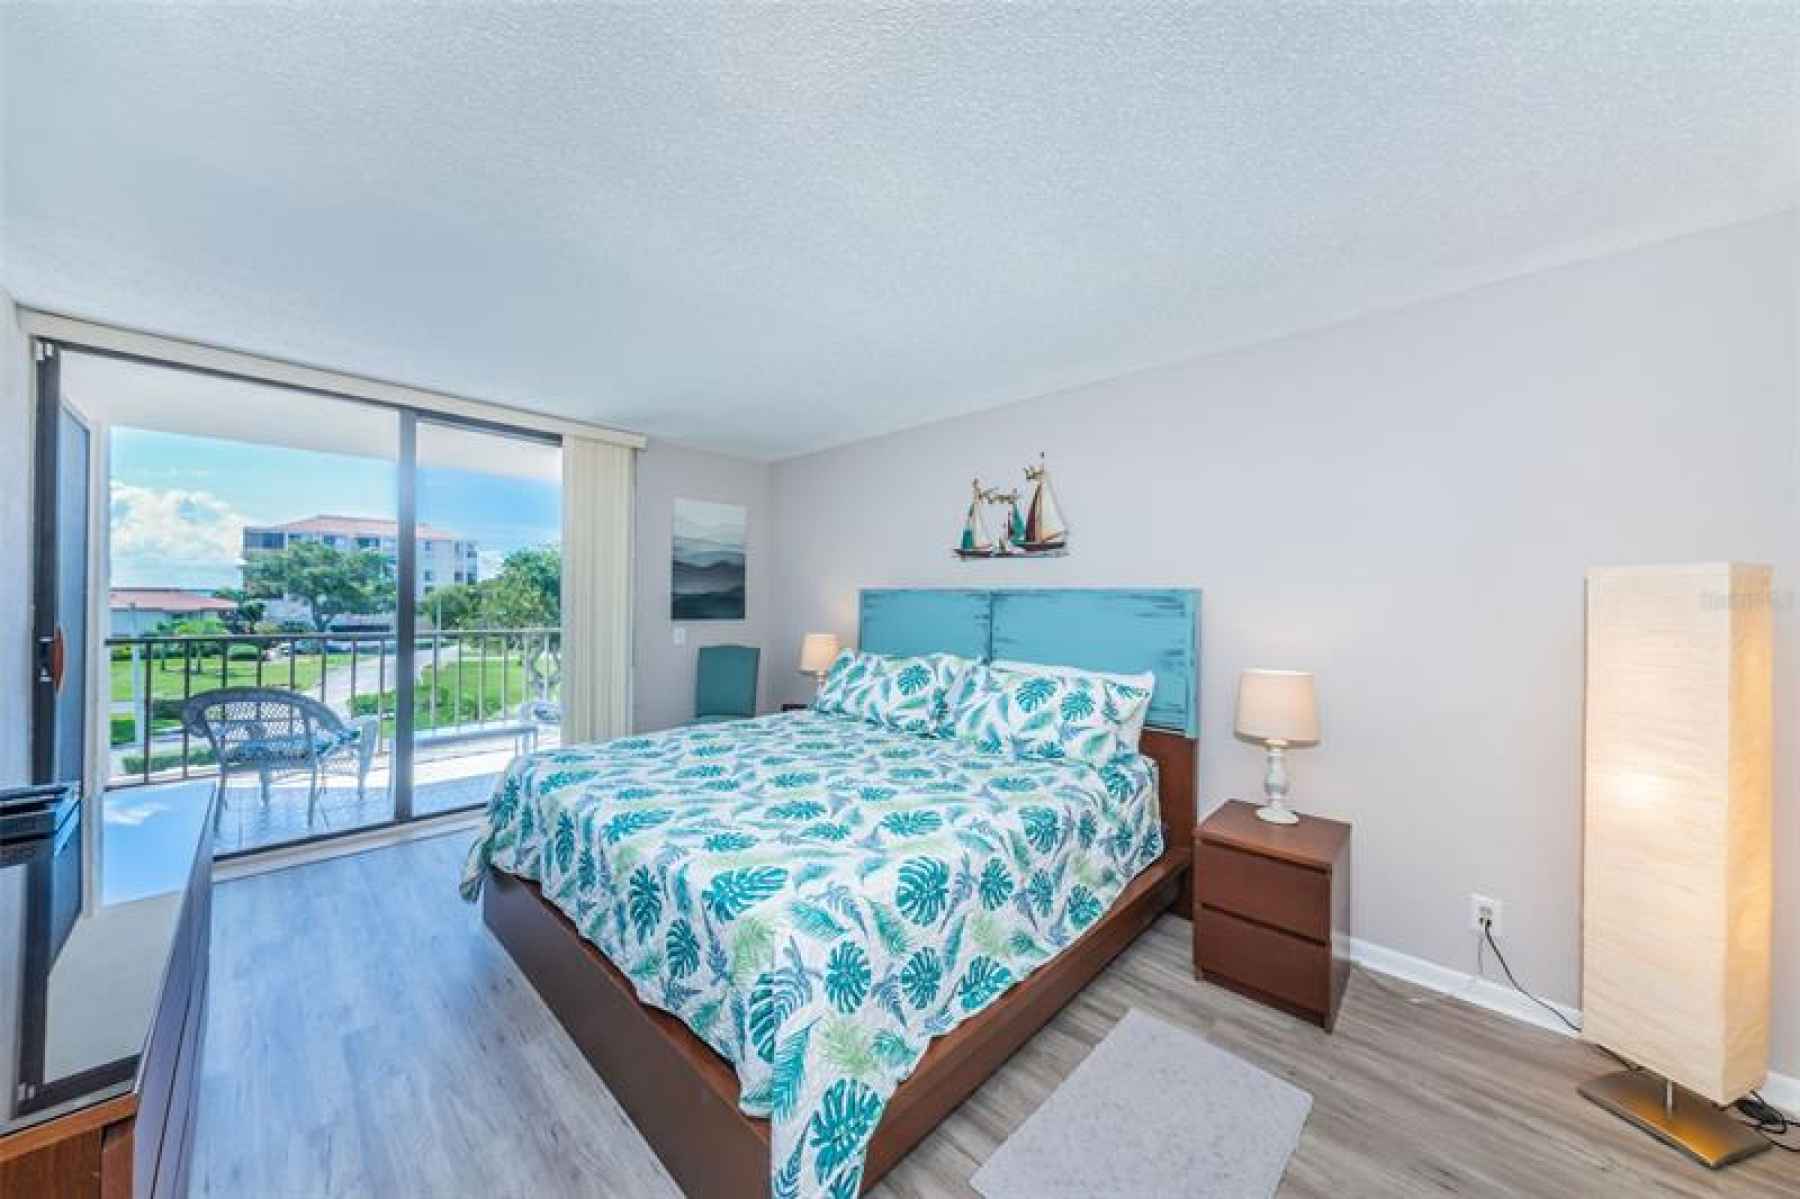 Master bedroom w/Tropical Views. Luxury vinyl plank flooring. Slider to balcony.